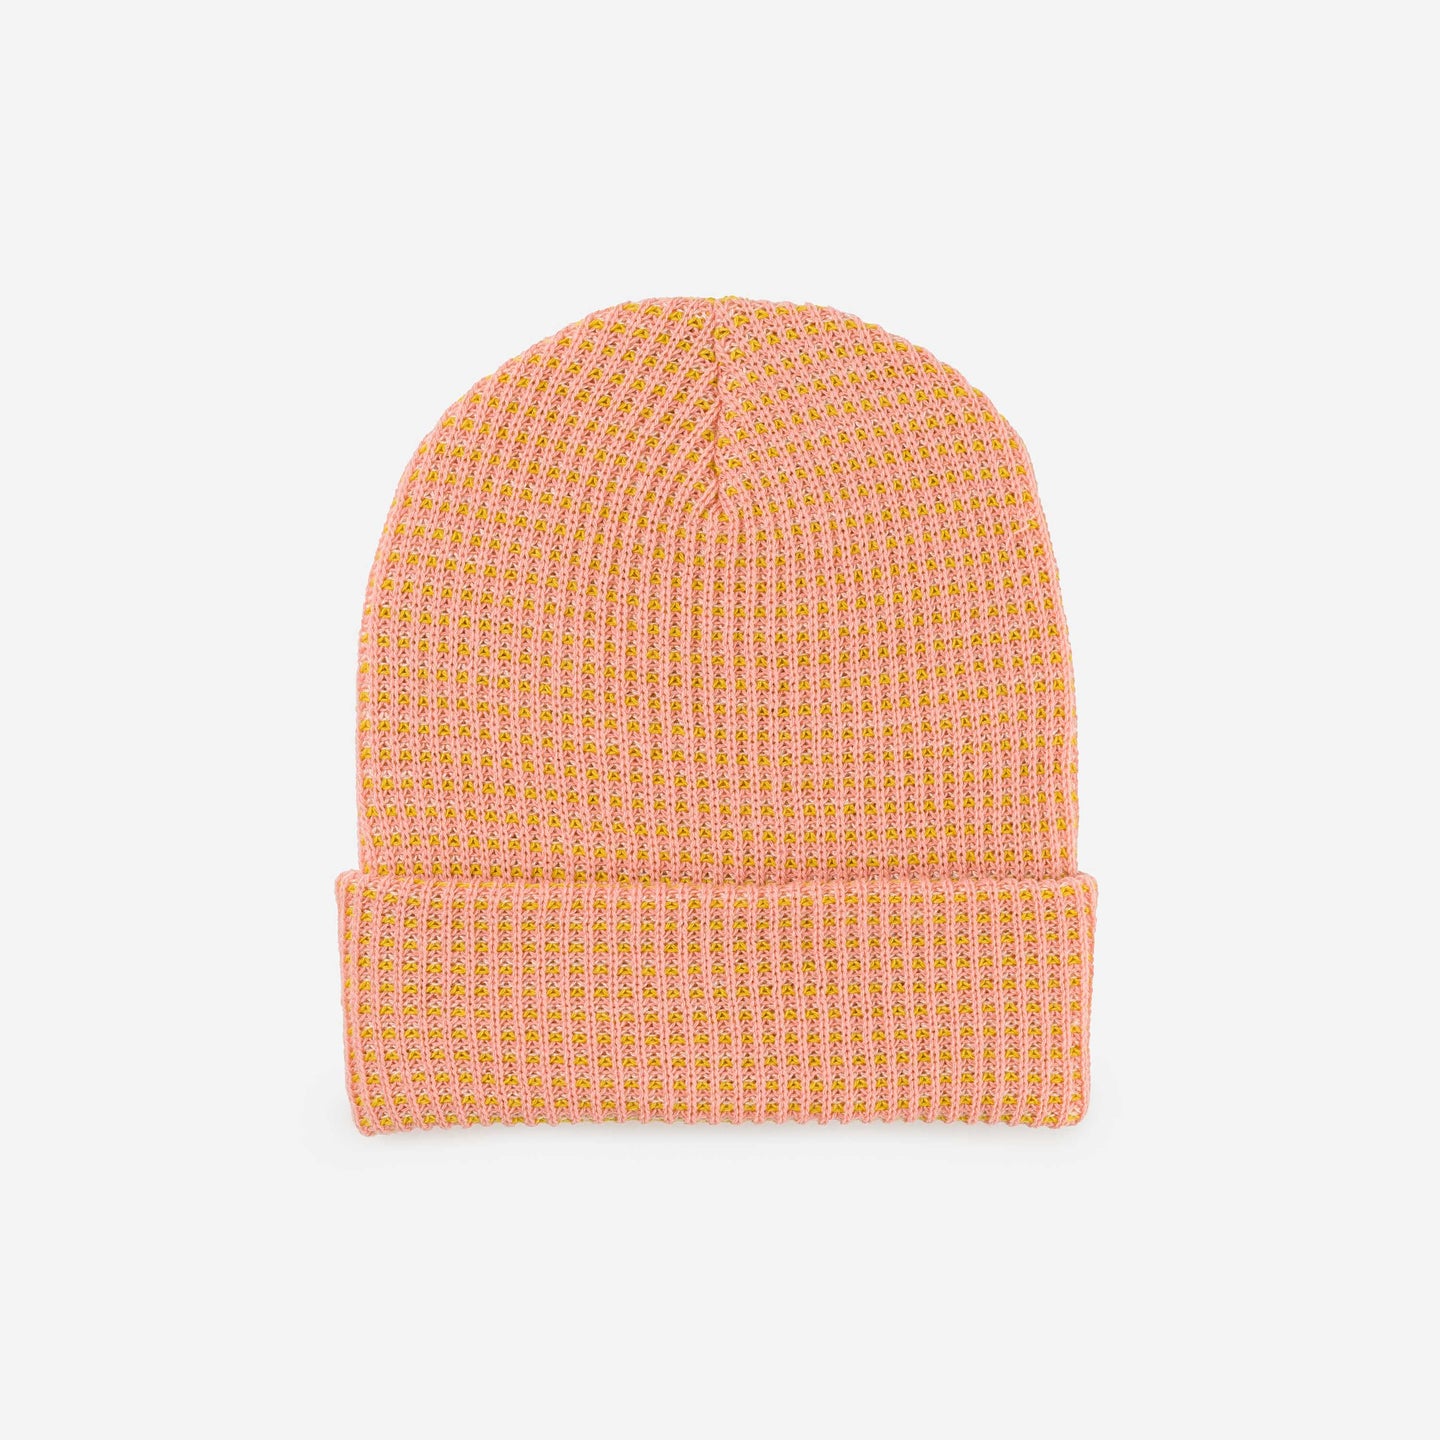 Simple Grid Knit Hat beanie slouchy unisex mens large head